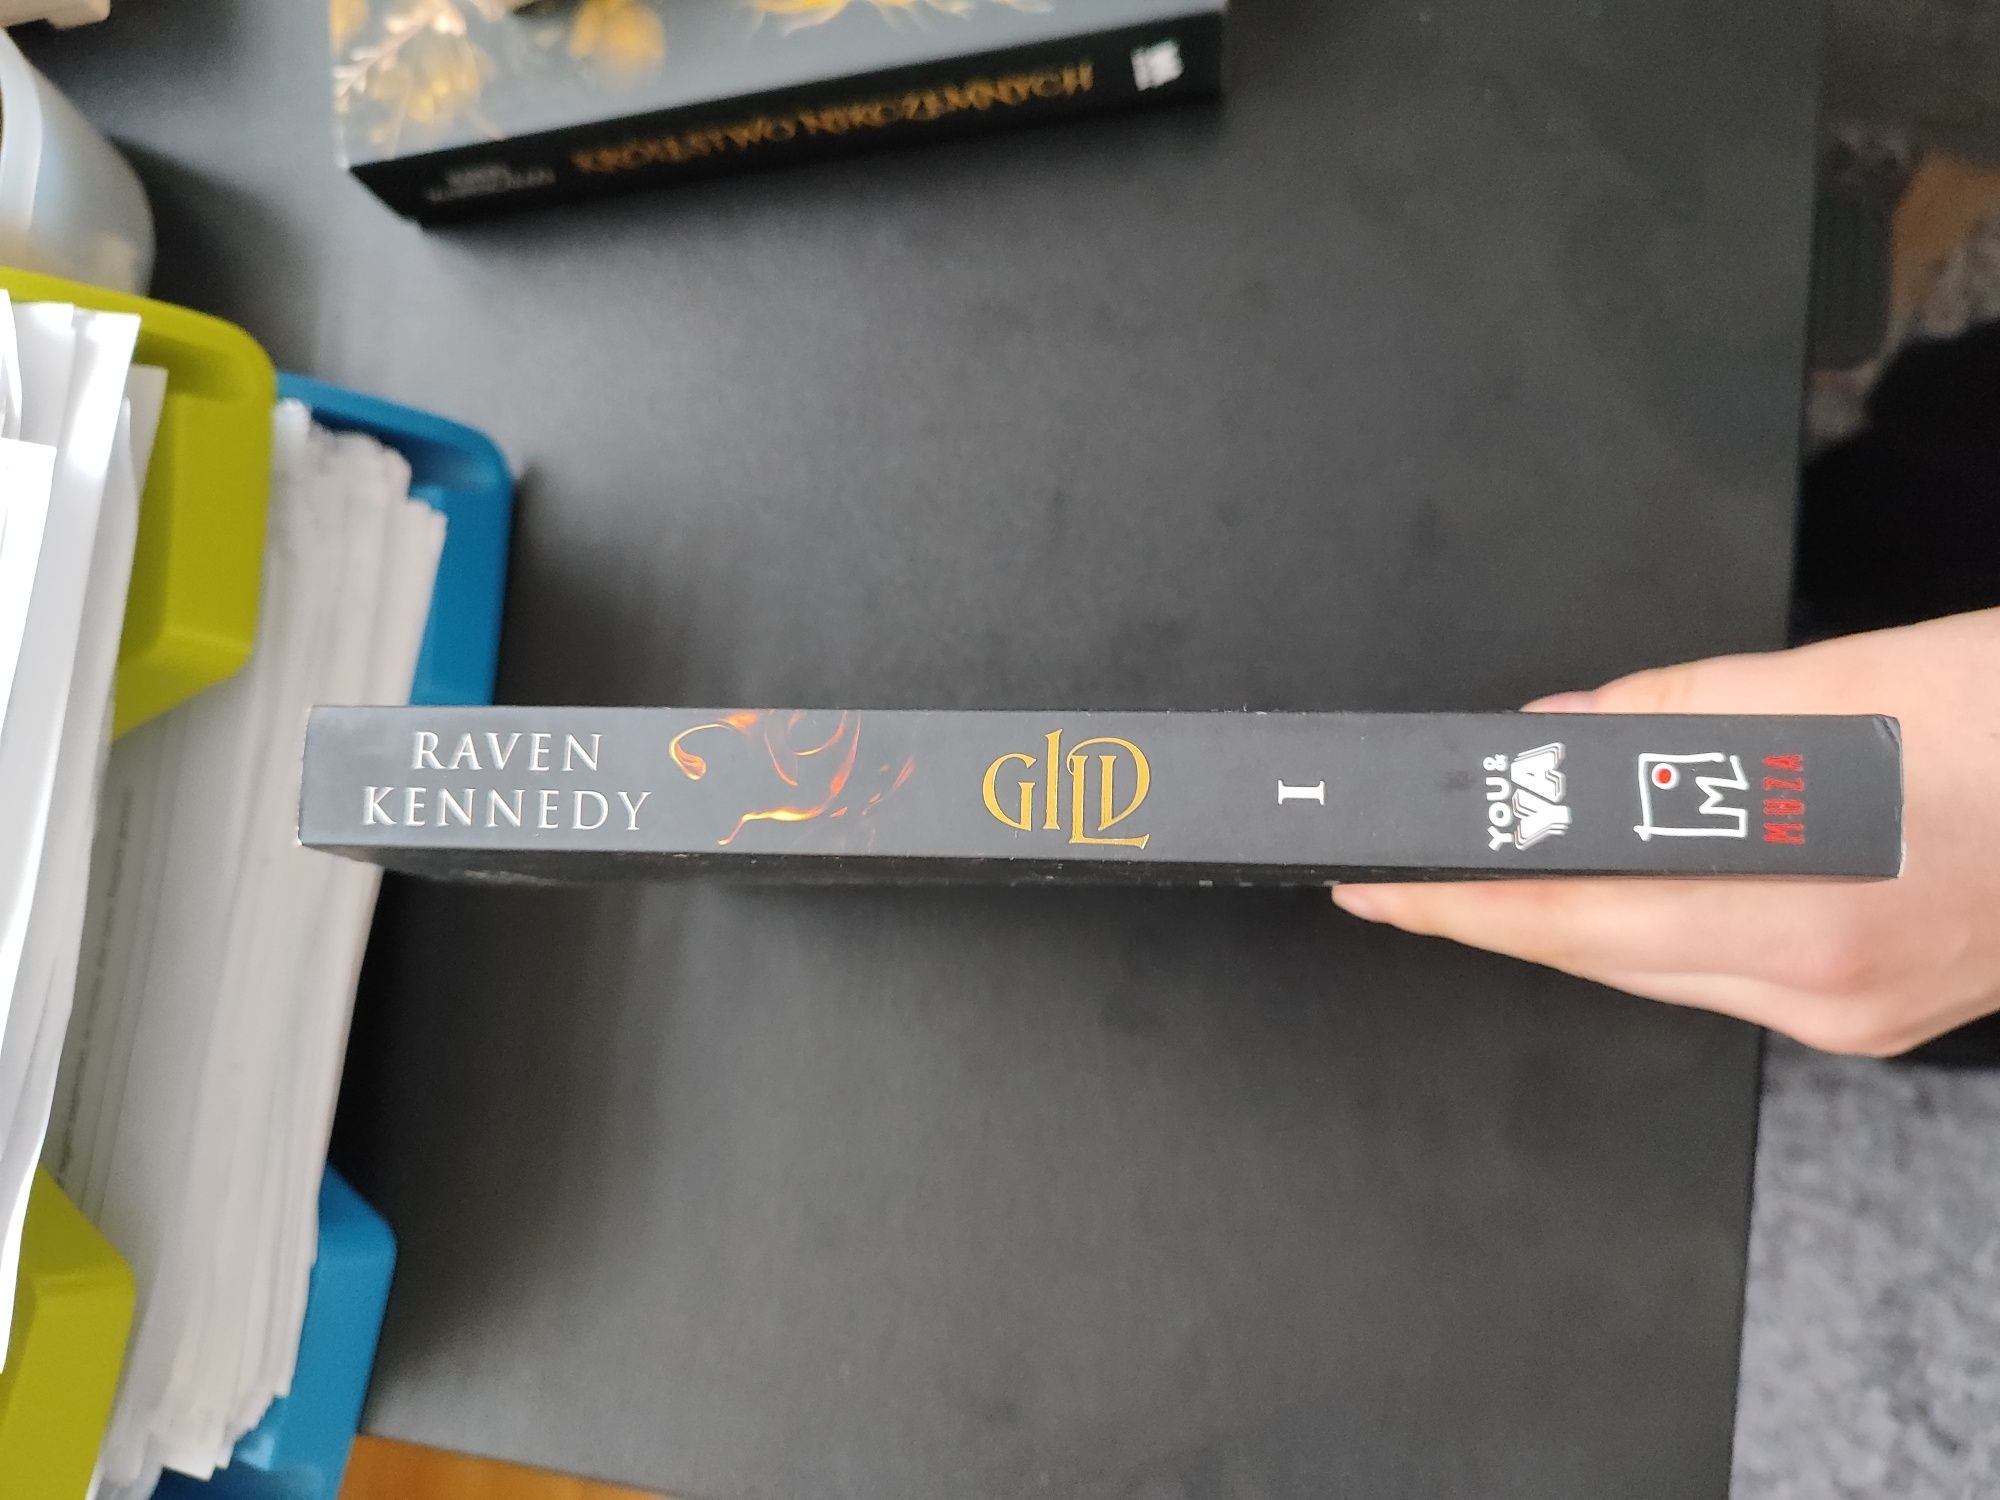 bestsellerowa książka "Gild"